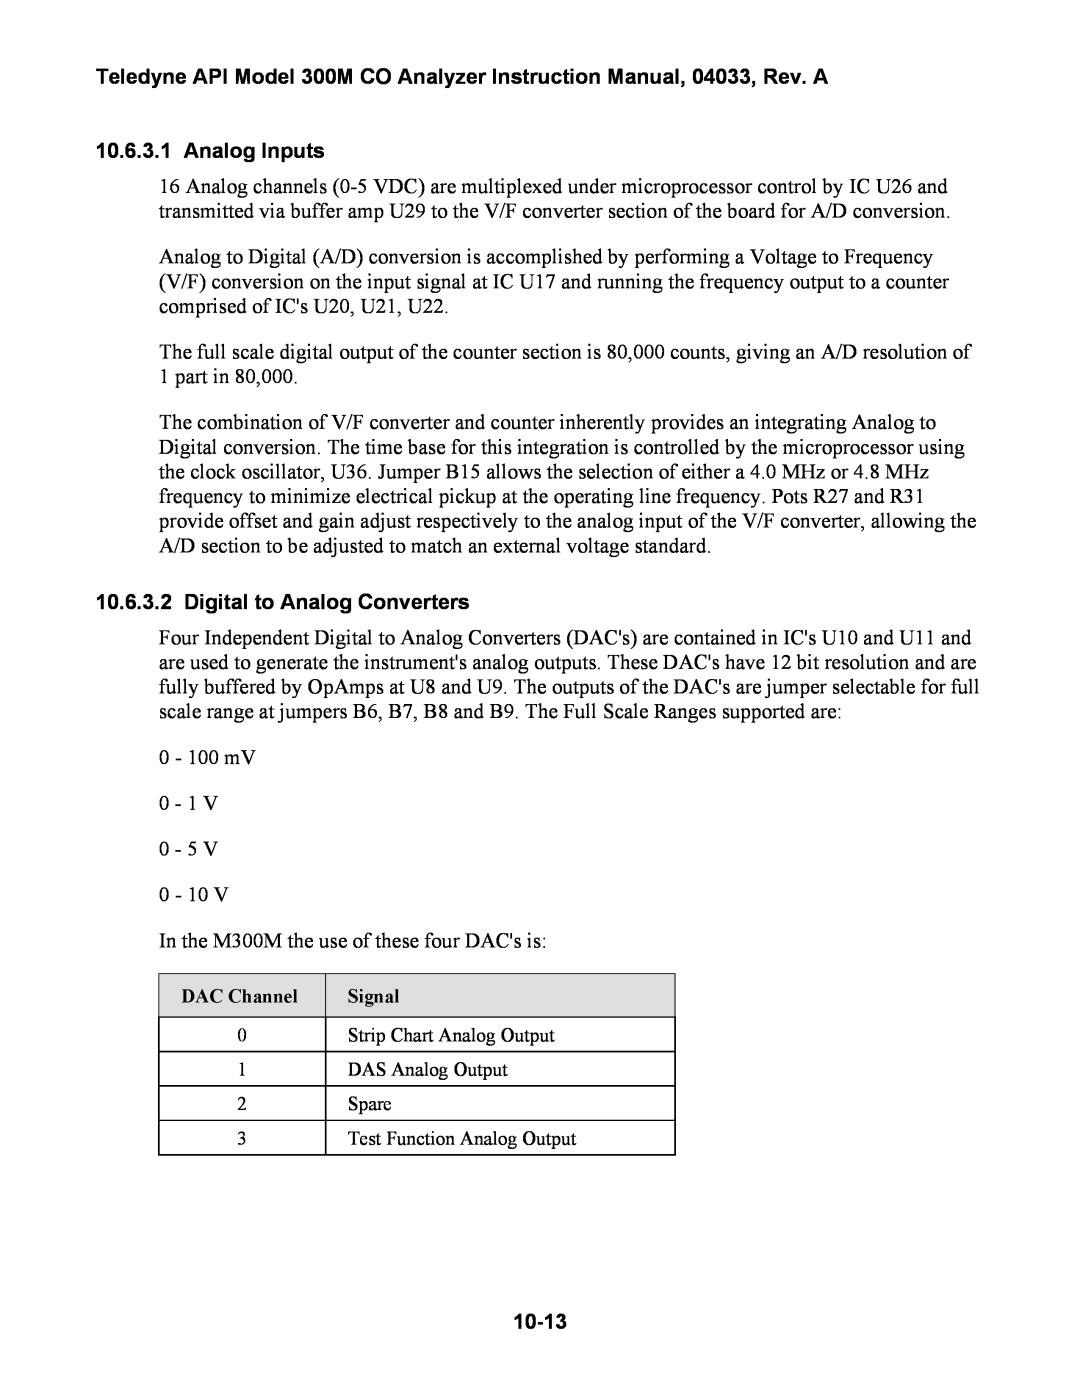 Teledyne 300M instruction manual Analog Inputs, Digital to Analog Converters, 10-13 